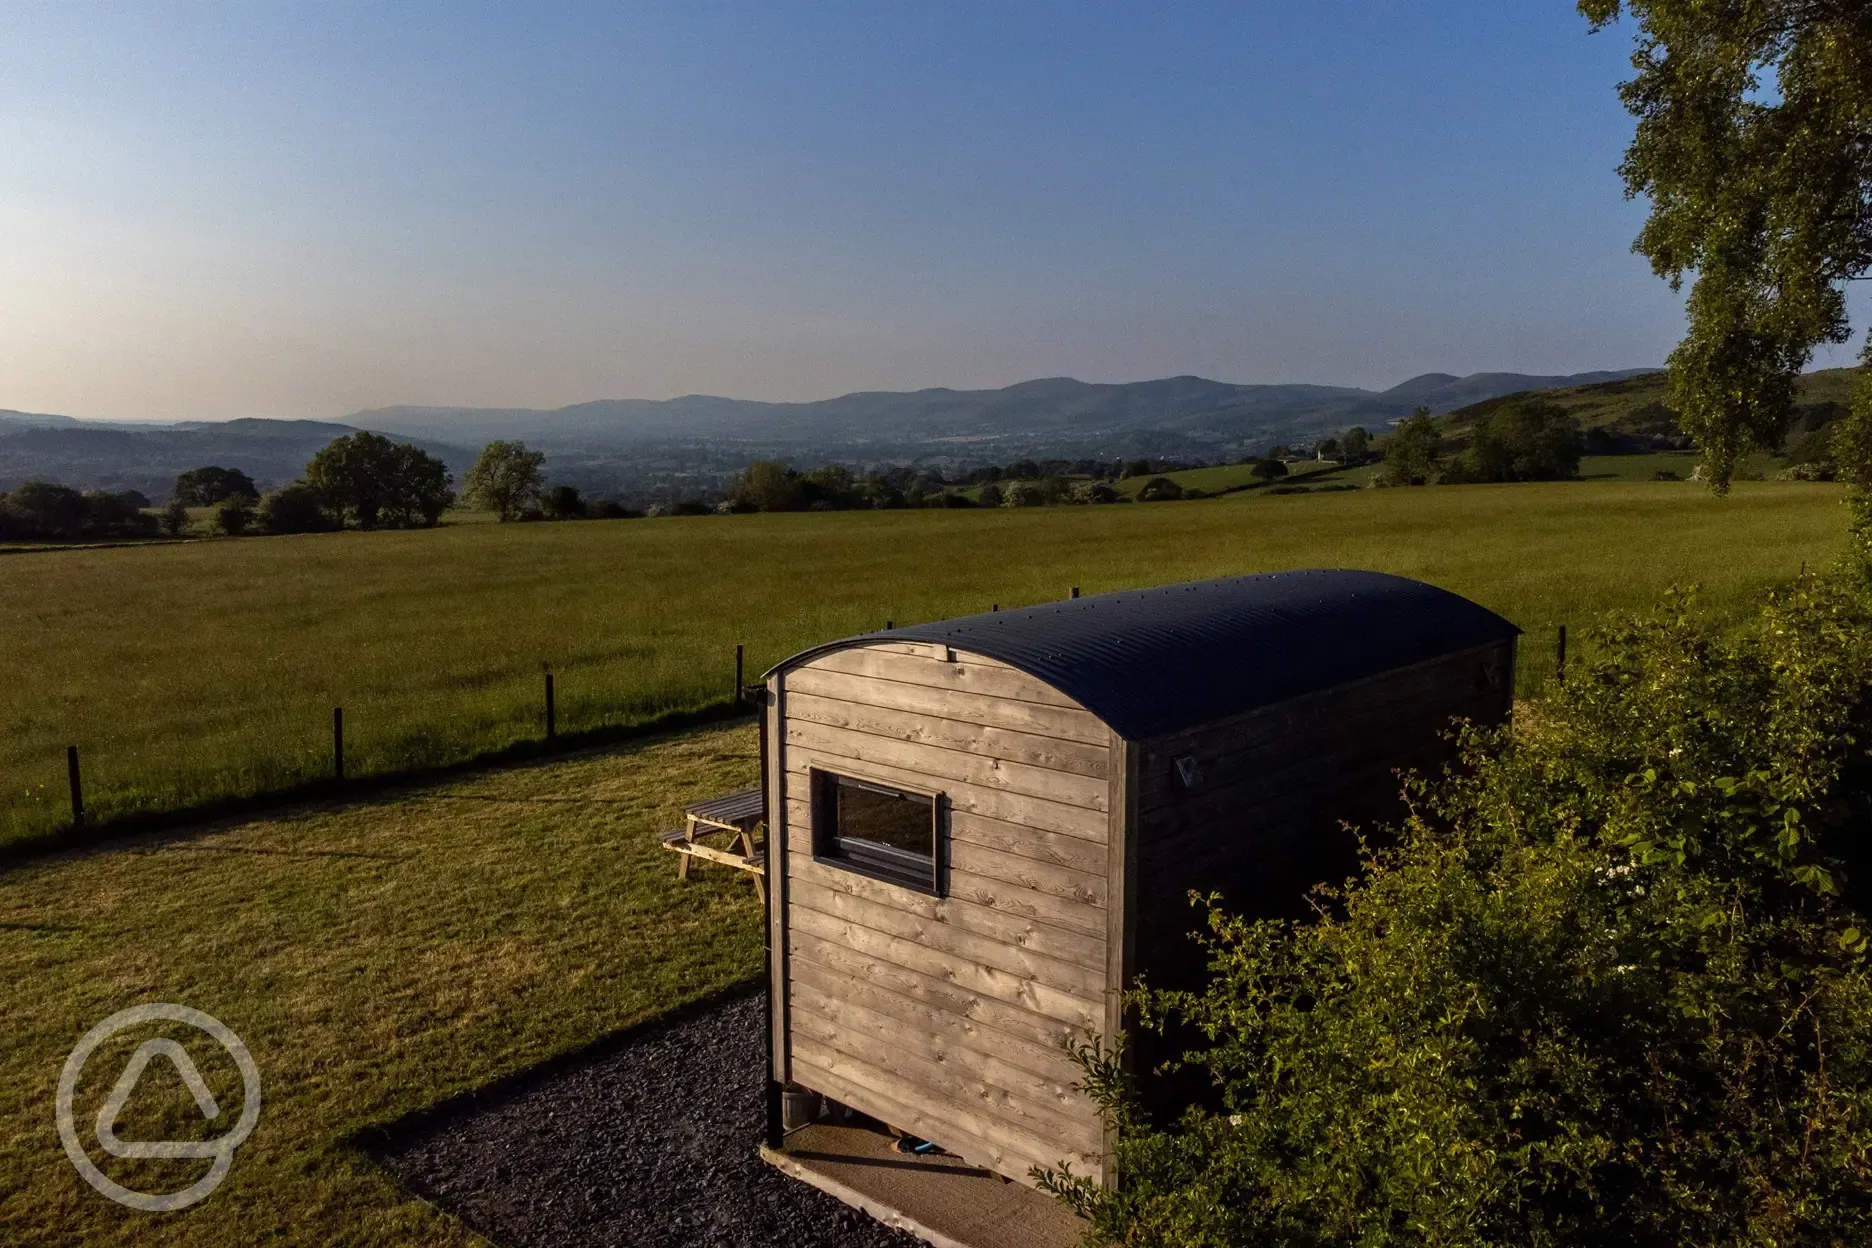 Shepherd's hut and countryside views